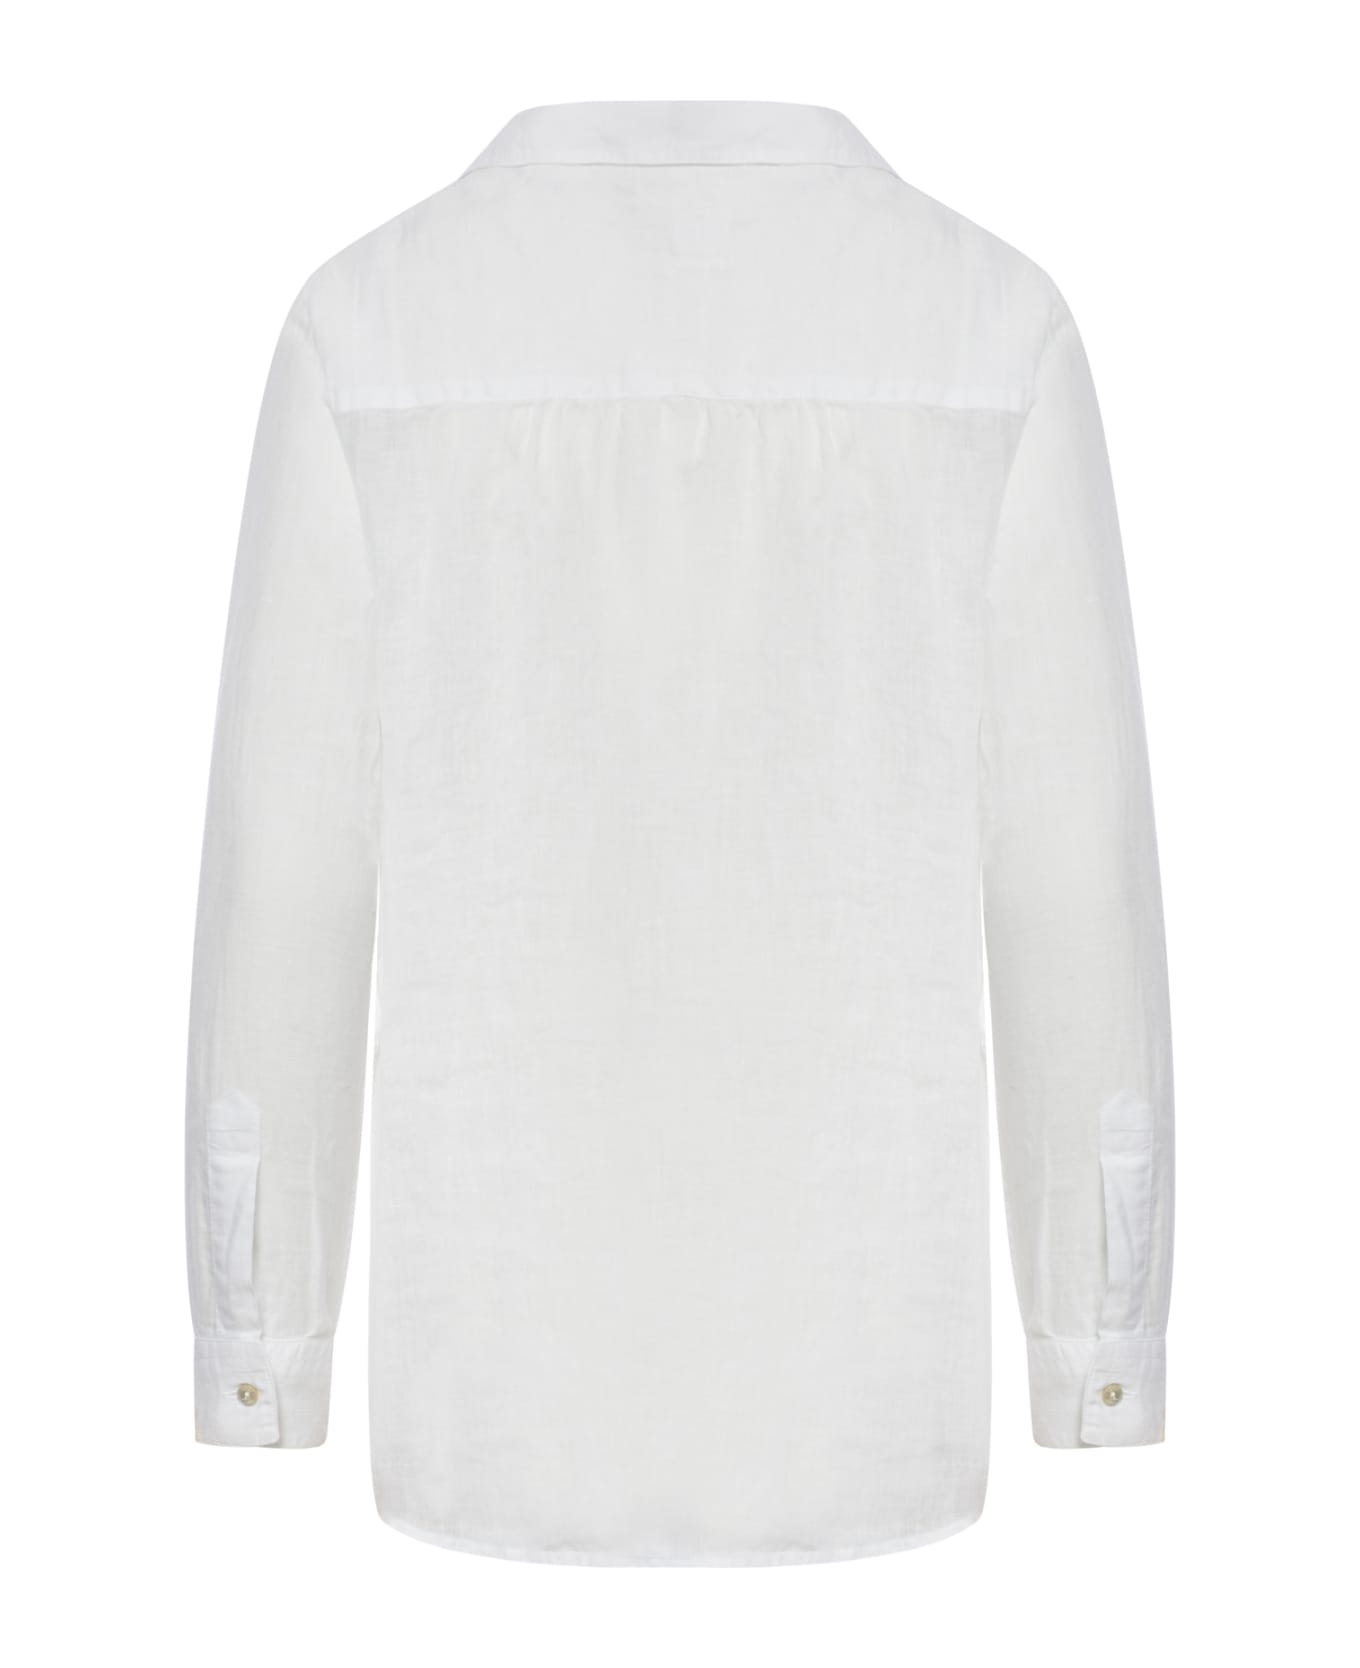 120% Lino Long Sleeve Woman Shirt - White